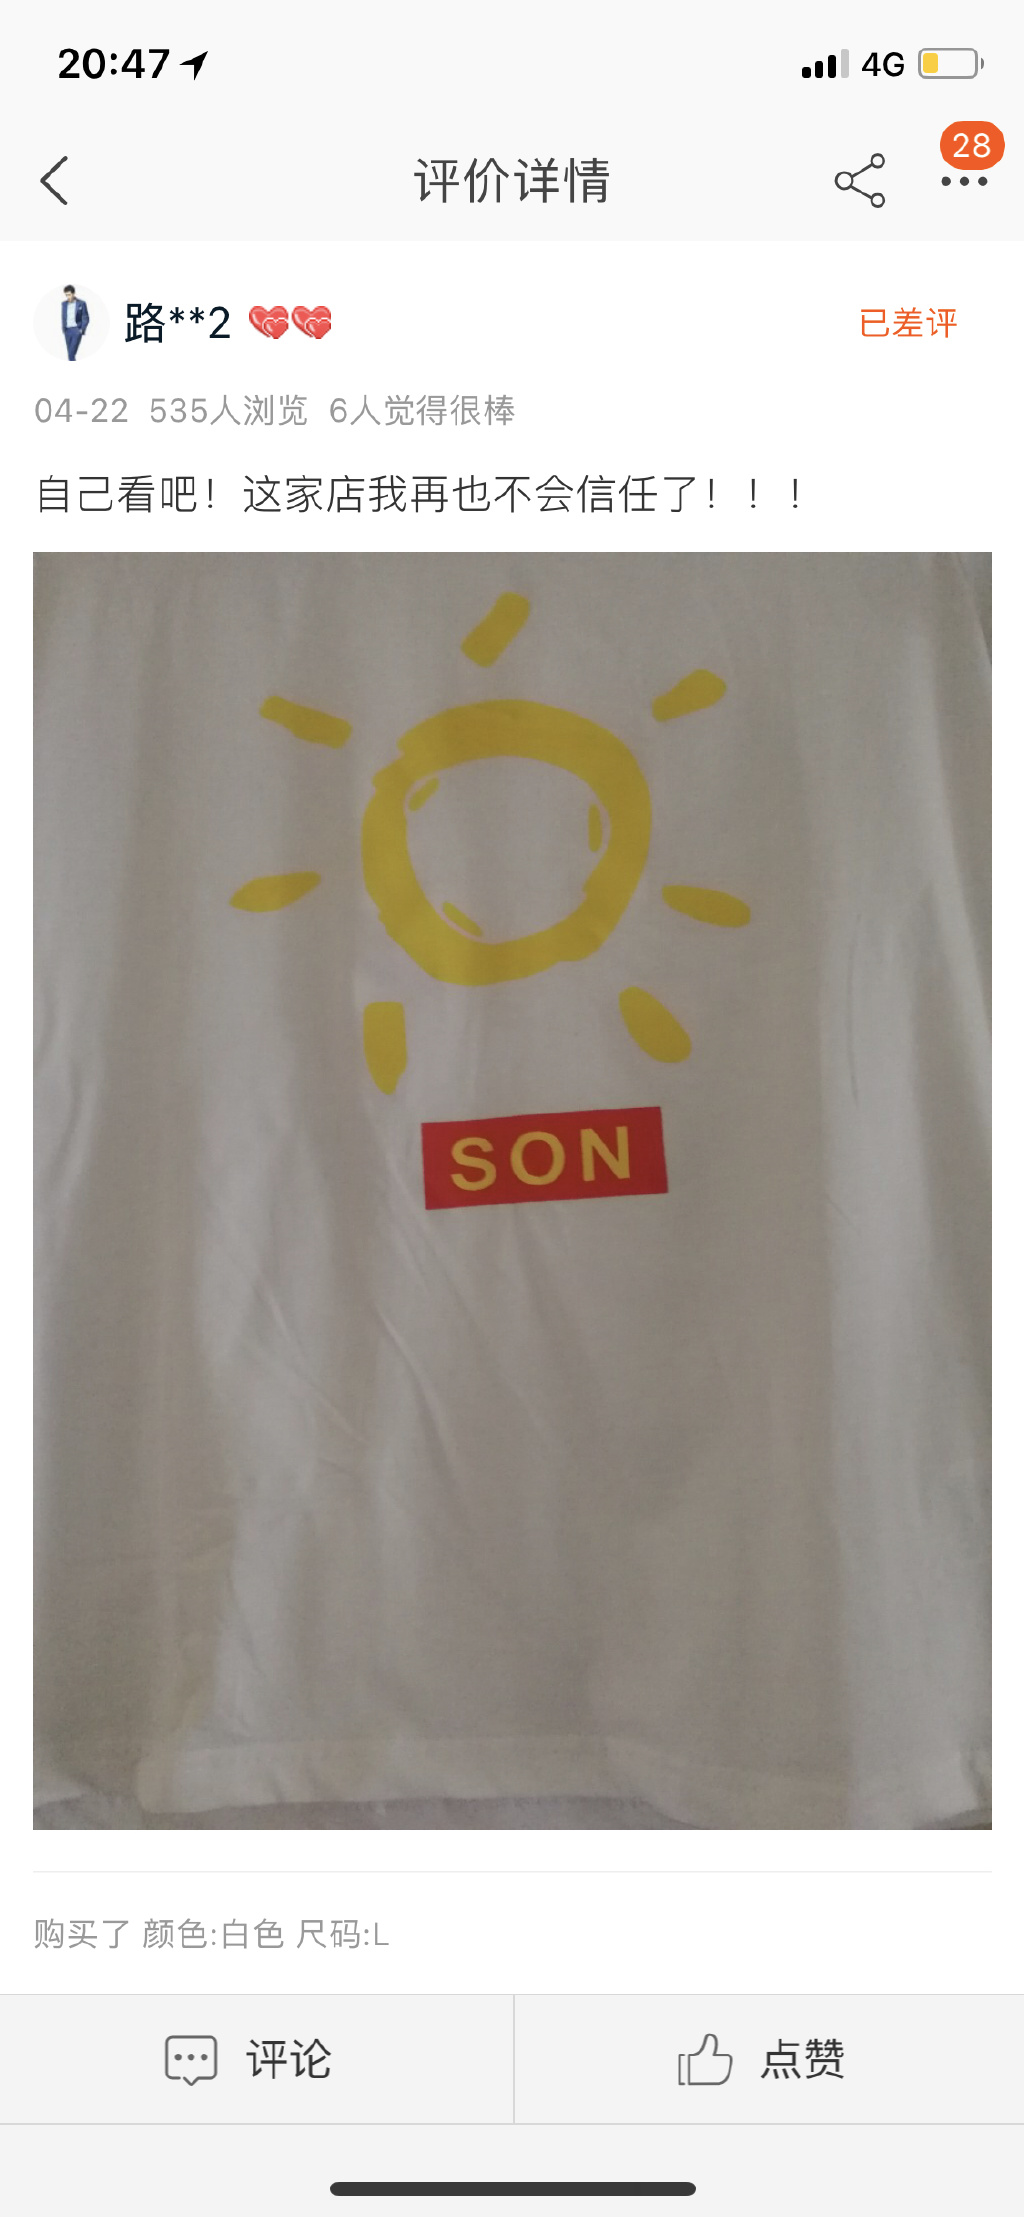 sun=son！！